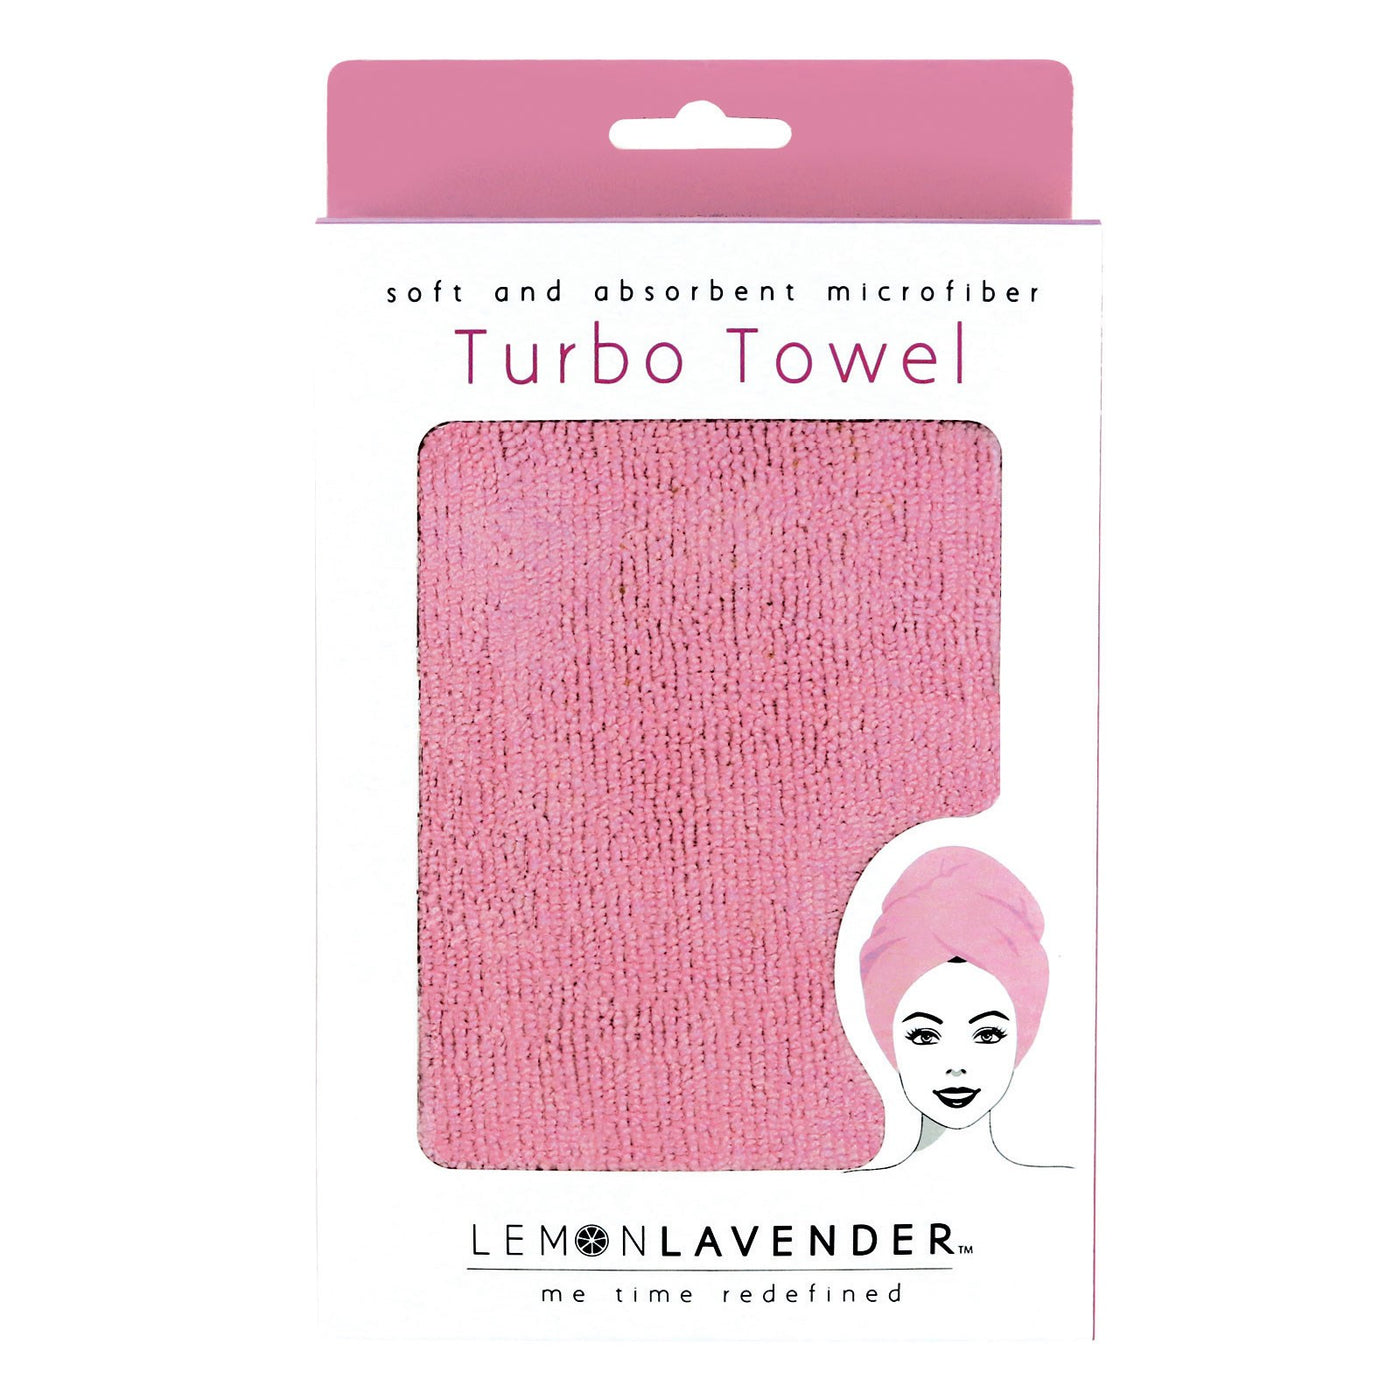 Turbo Towel - Hair Drying Towel in Fun Colors and Prints from Lemon Lavender